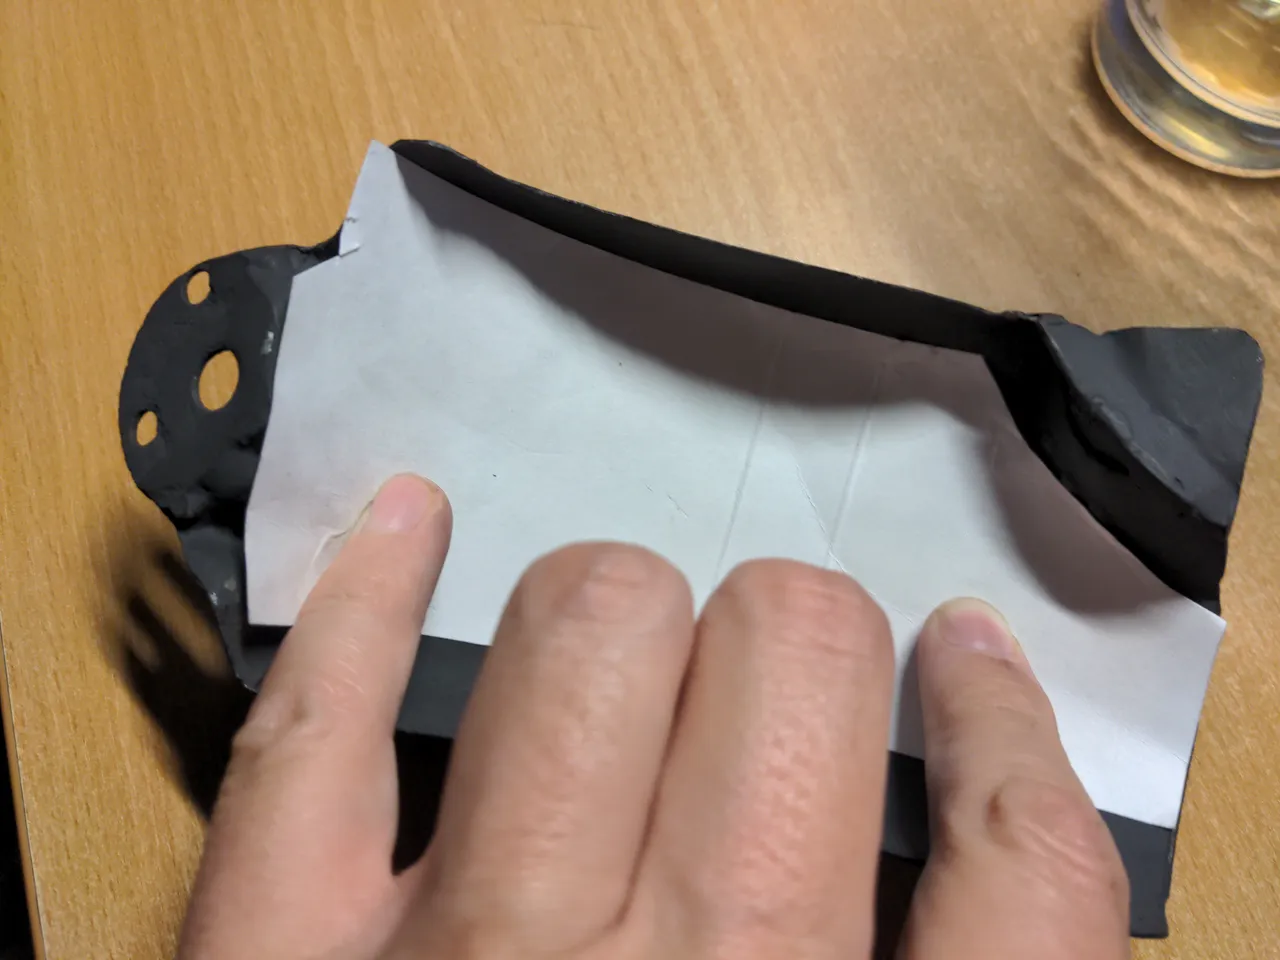 A cardboard template cut and sitting neatly inside my heat shield.